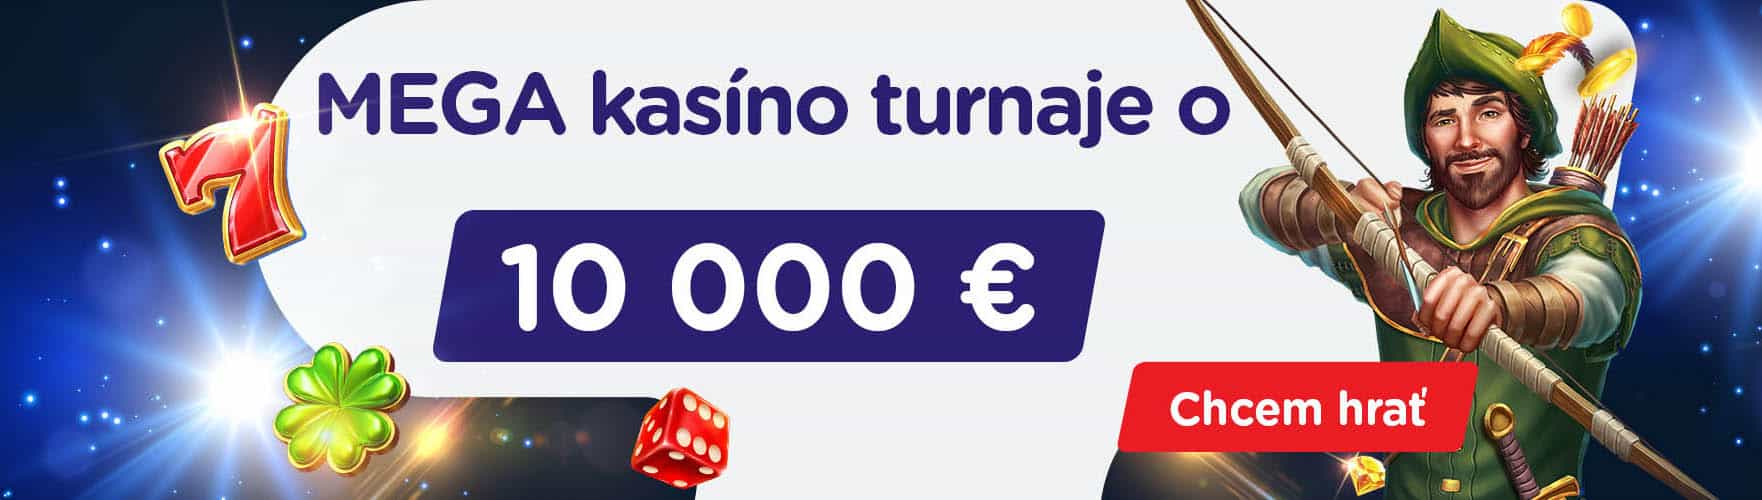 MEGA turnaje o 10 000 € v eTIPOS kasíne - banner